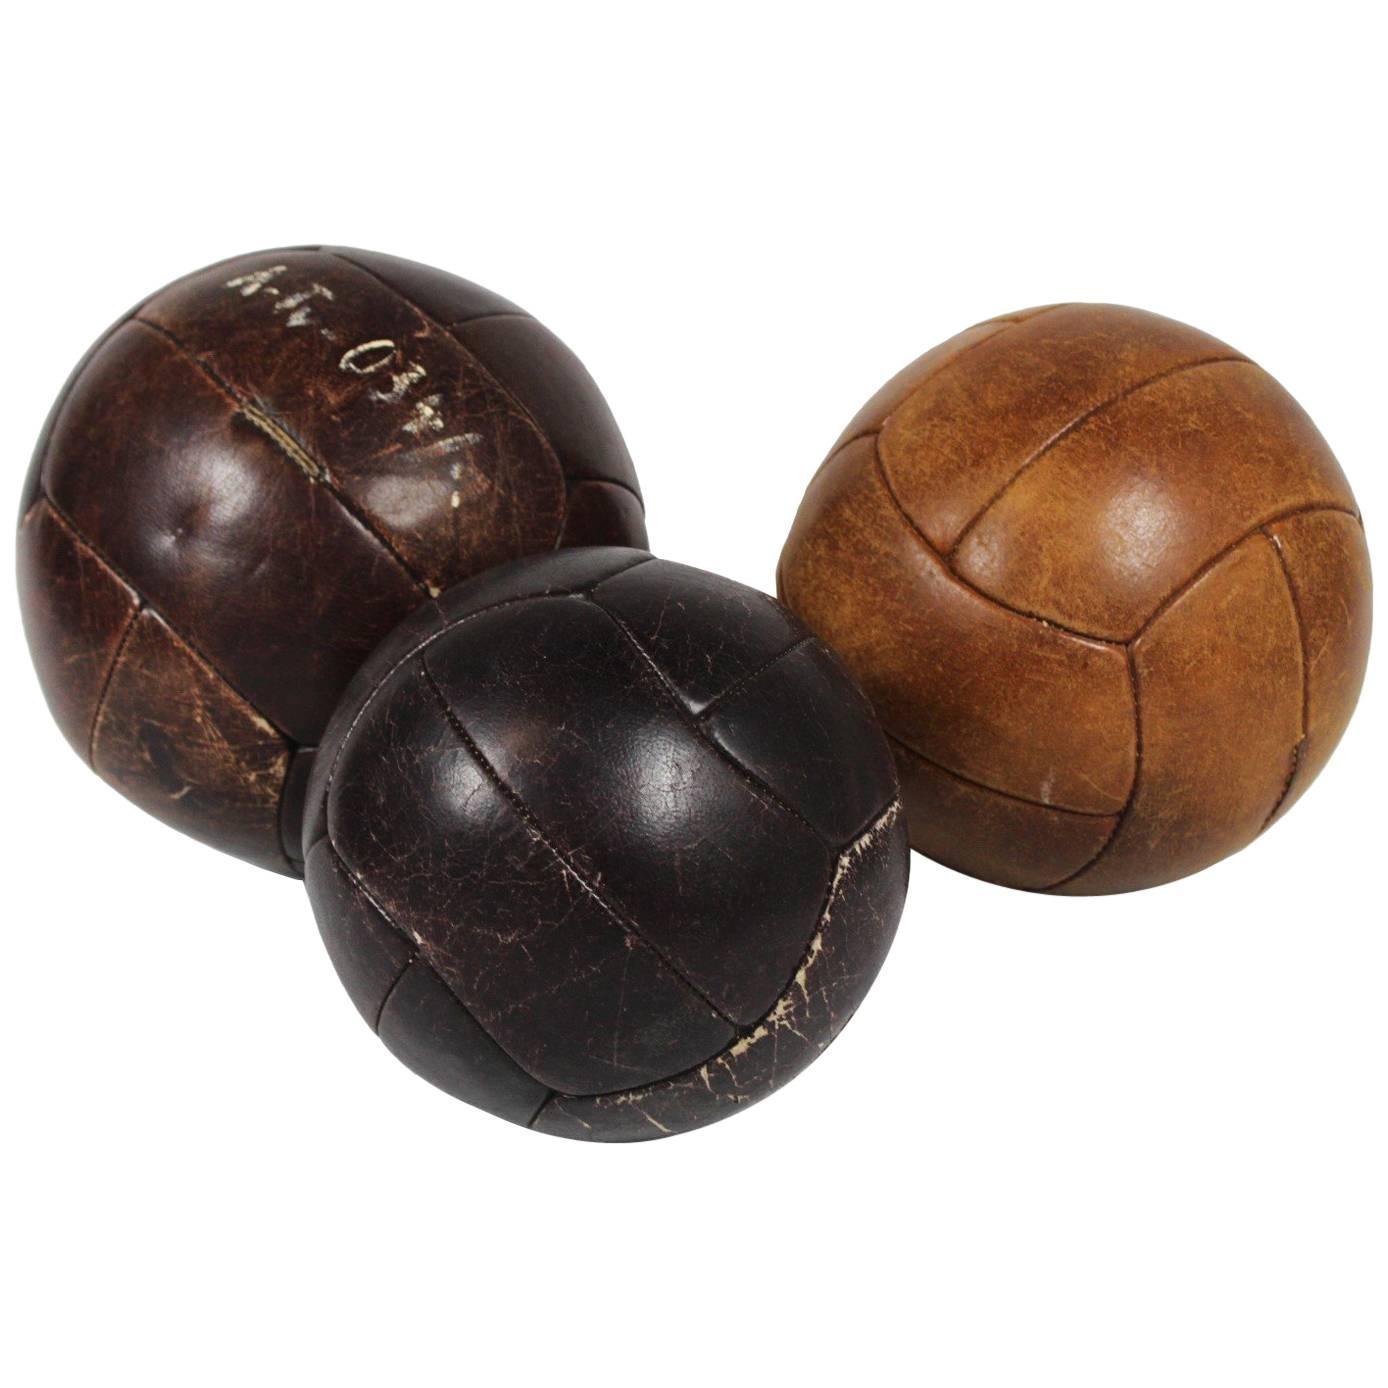 1960s Set of Three Leather Gym Balls